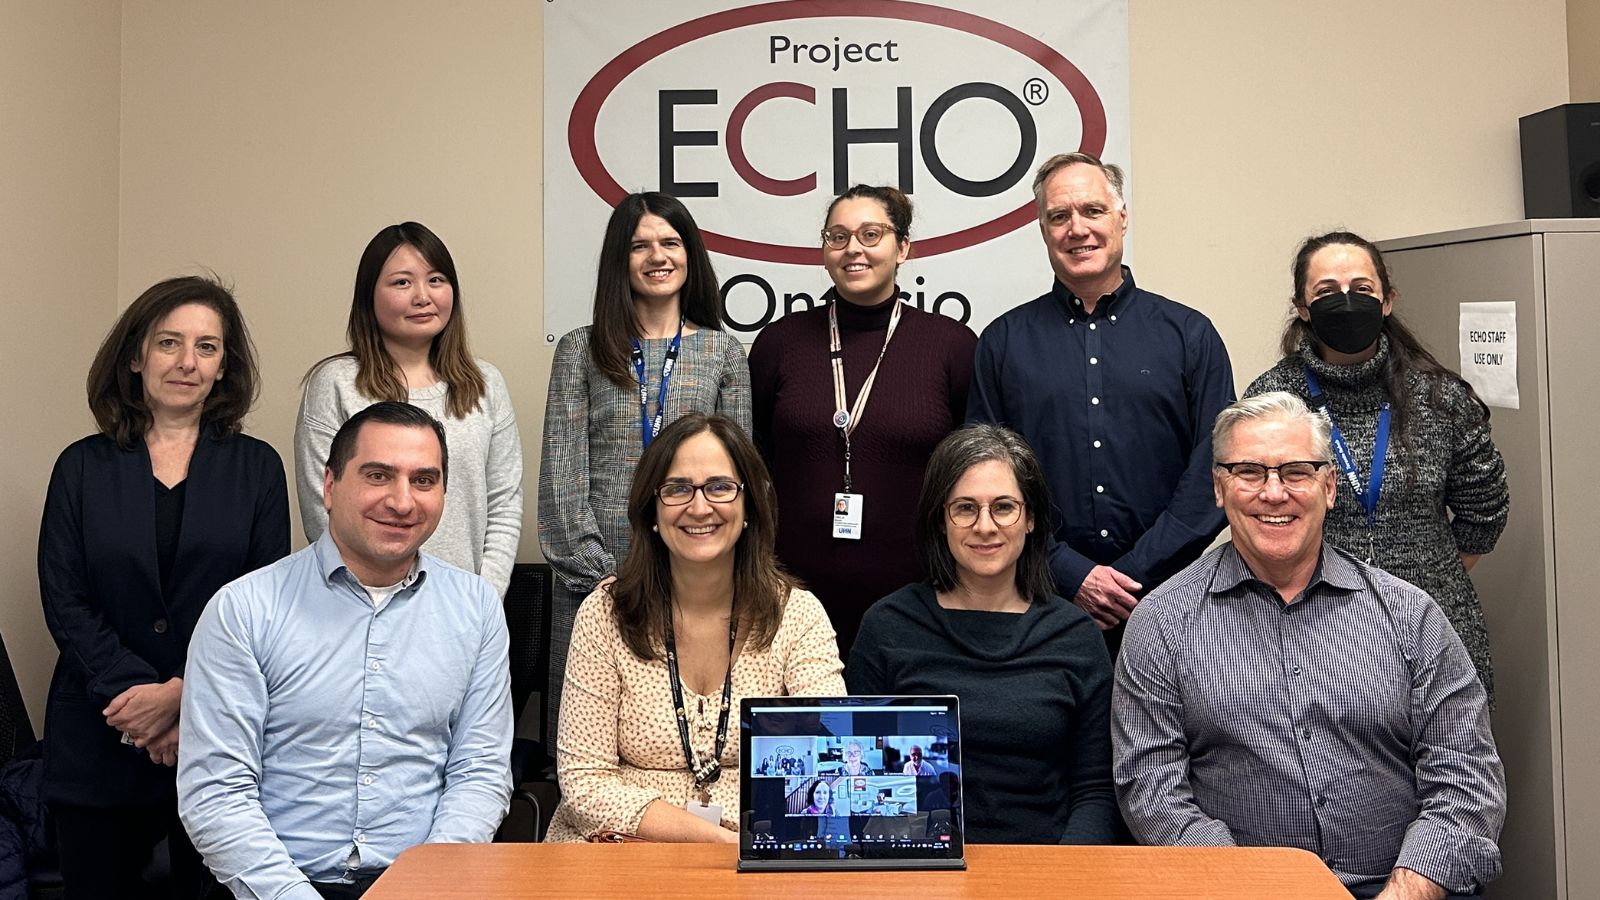 Some Members of the Interprofessional "Hub" Team for the ECHO Ontario Chronic Pain and Opioid Stewardship program at Toronto Rehab.